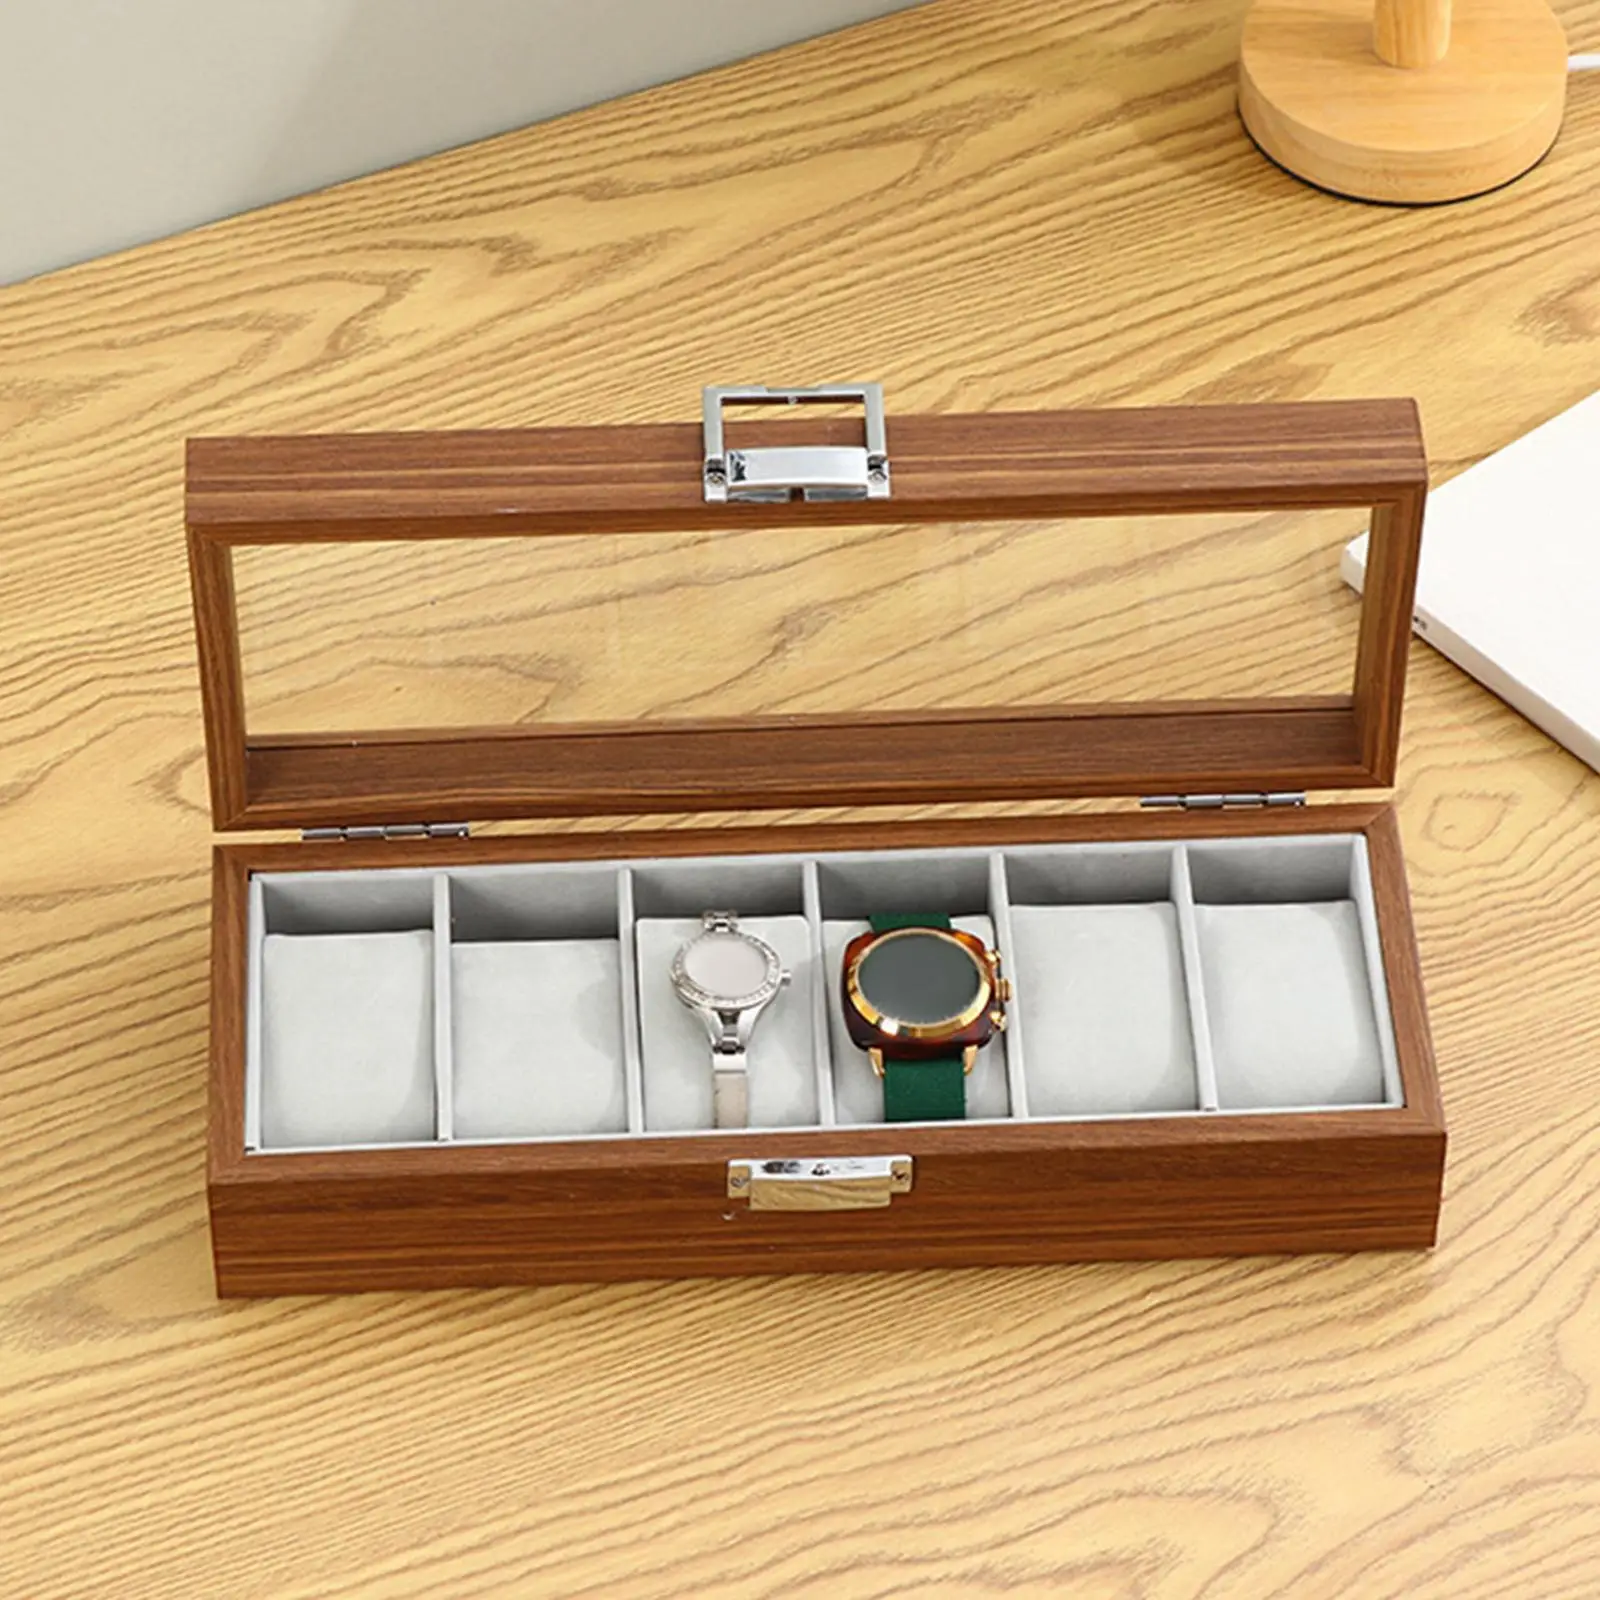 Watch Box Organizer 6 Slot Dustproof Watch Organizer Holder for Table Dresser Shop Display Watches Jewelry Display Men and Women